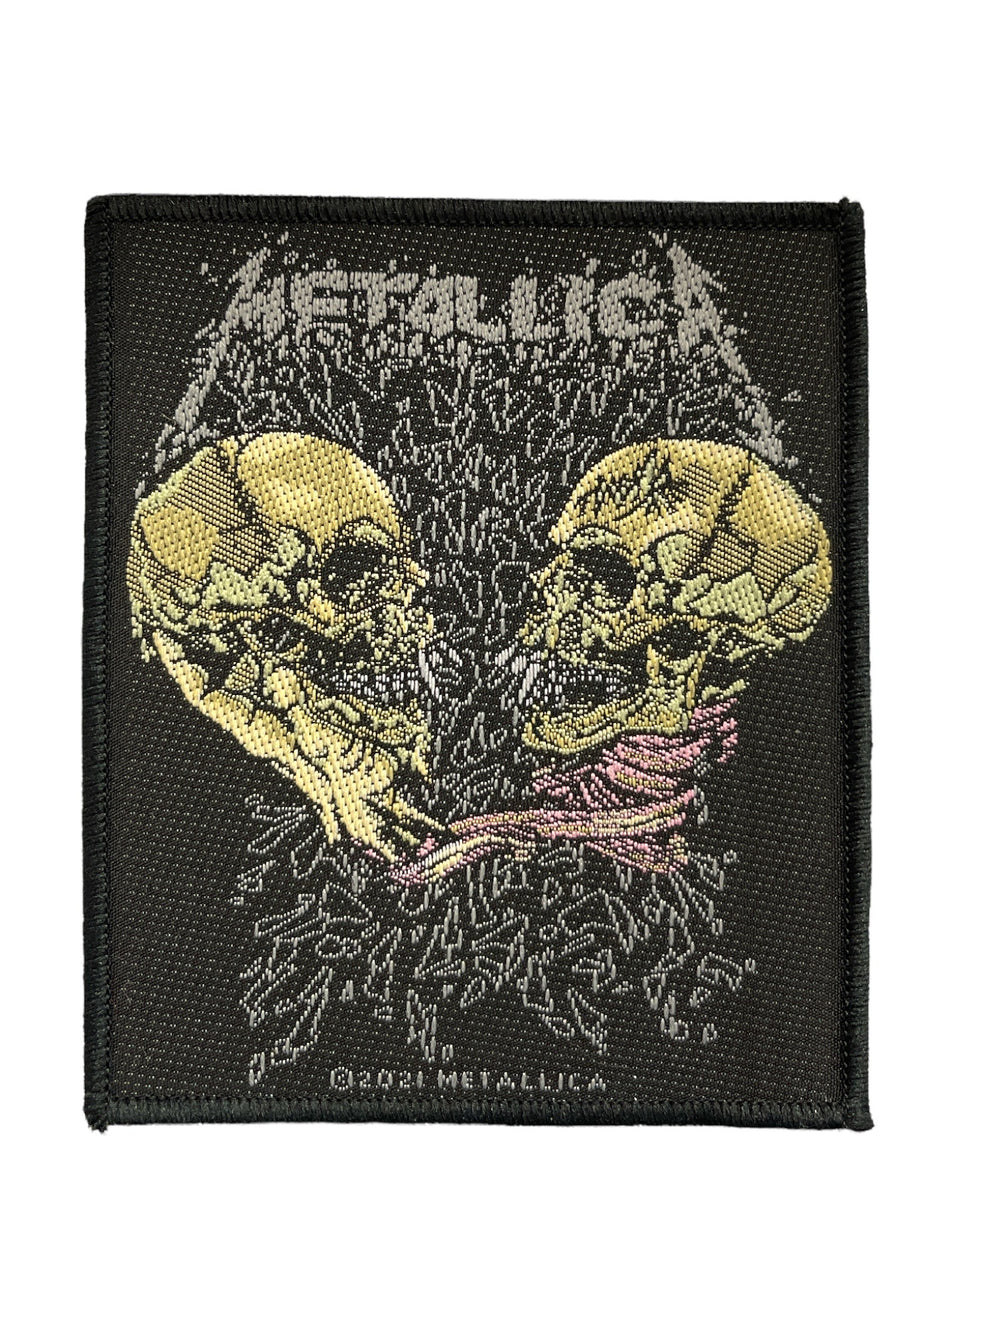 Metallica Sad But True Official Woven Patch Brand New